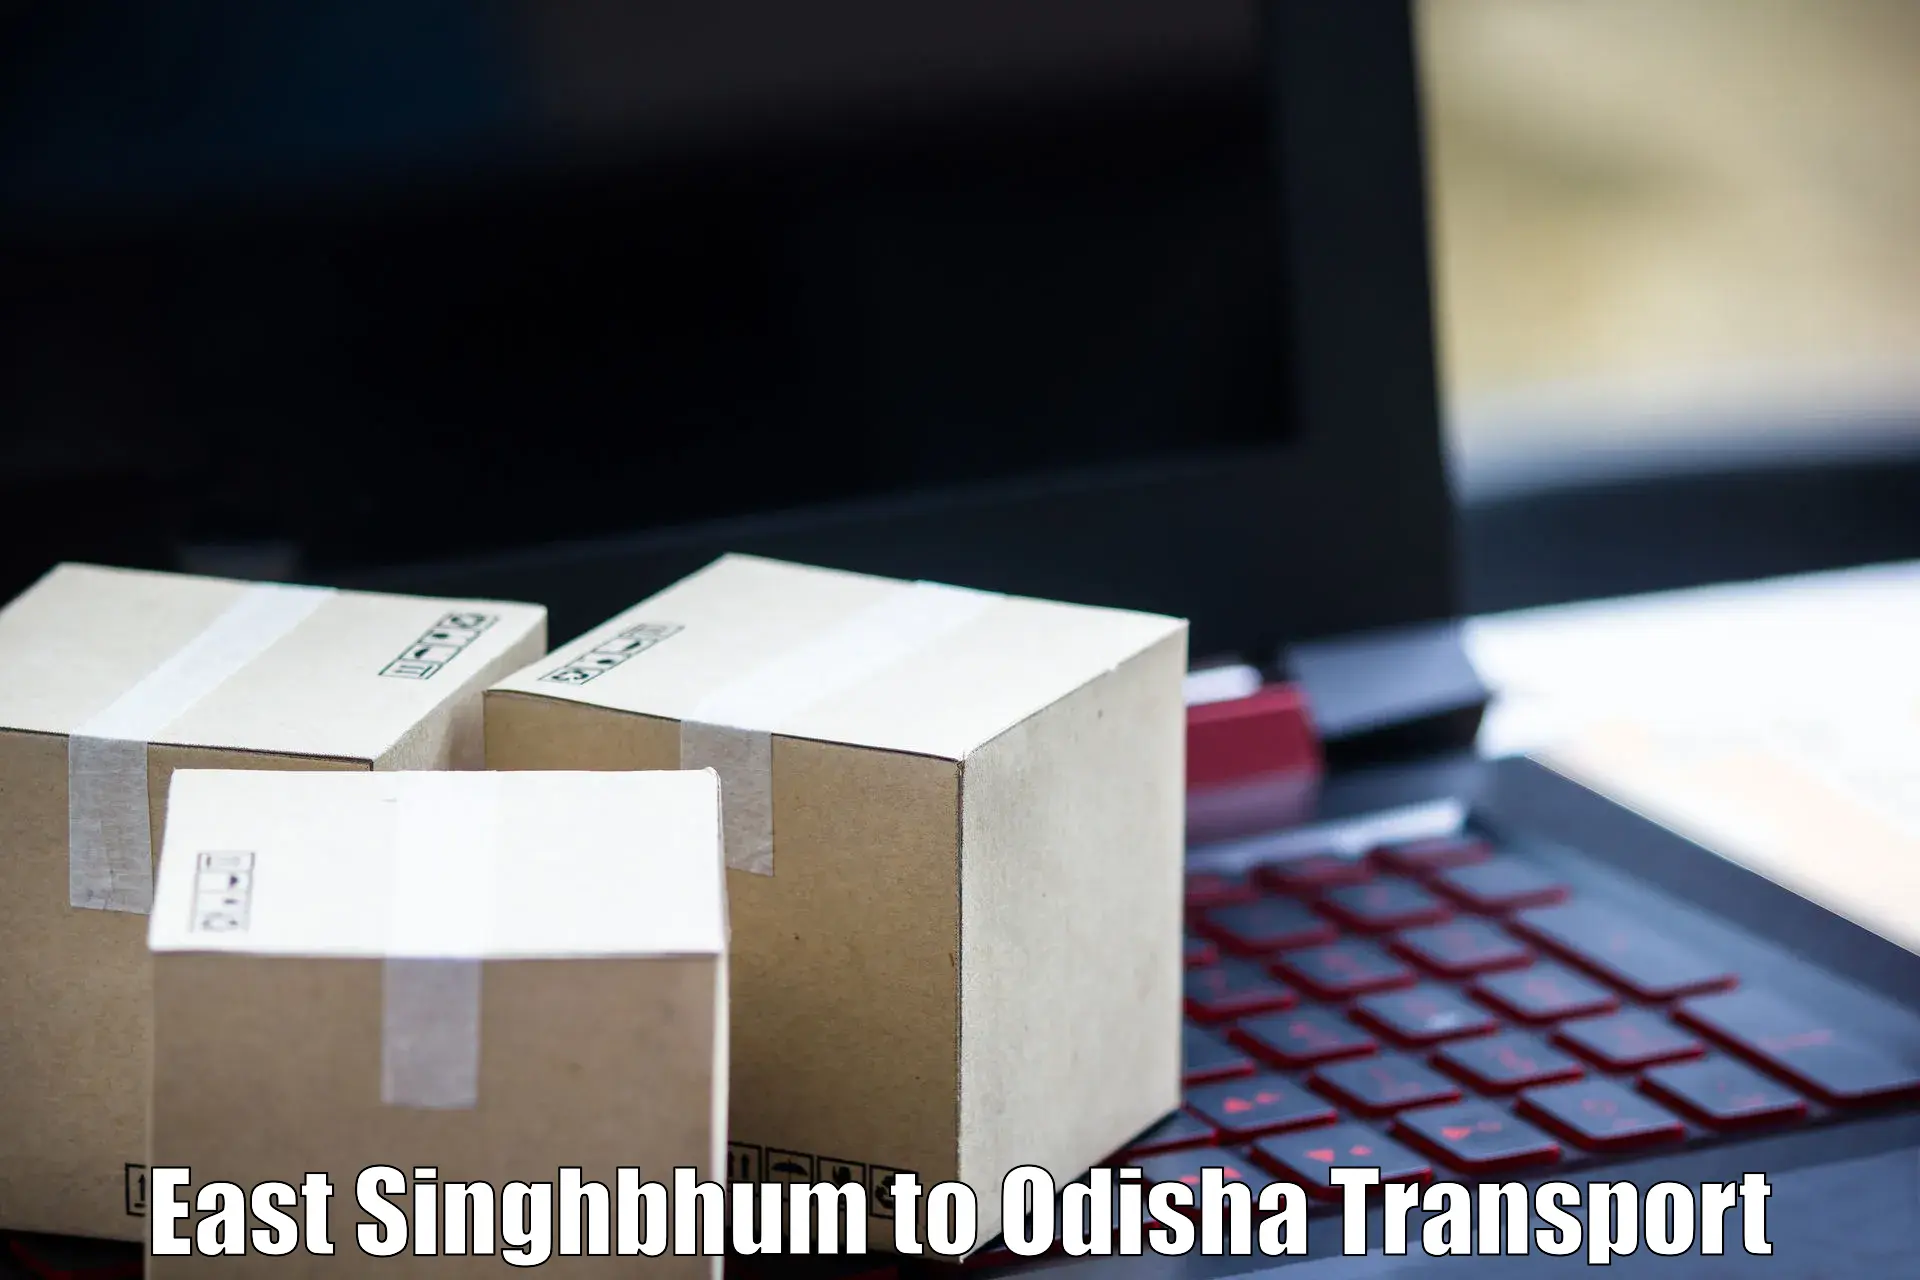 Shipping partner East Singhbhum to Baisinga